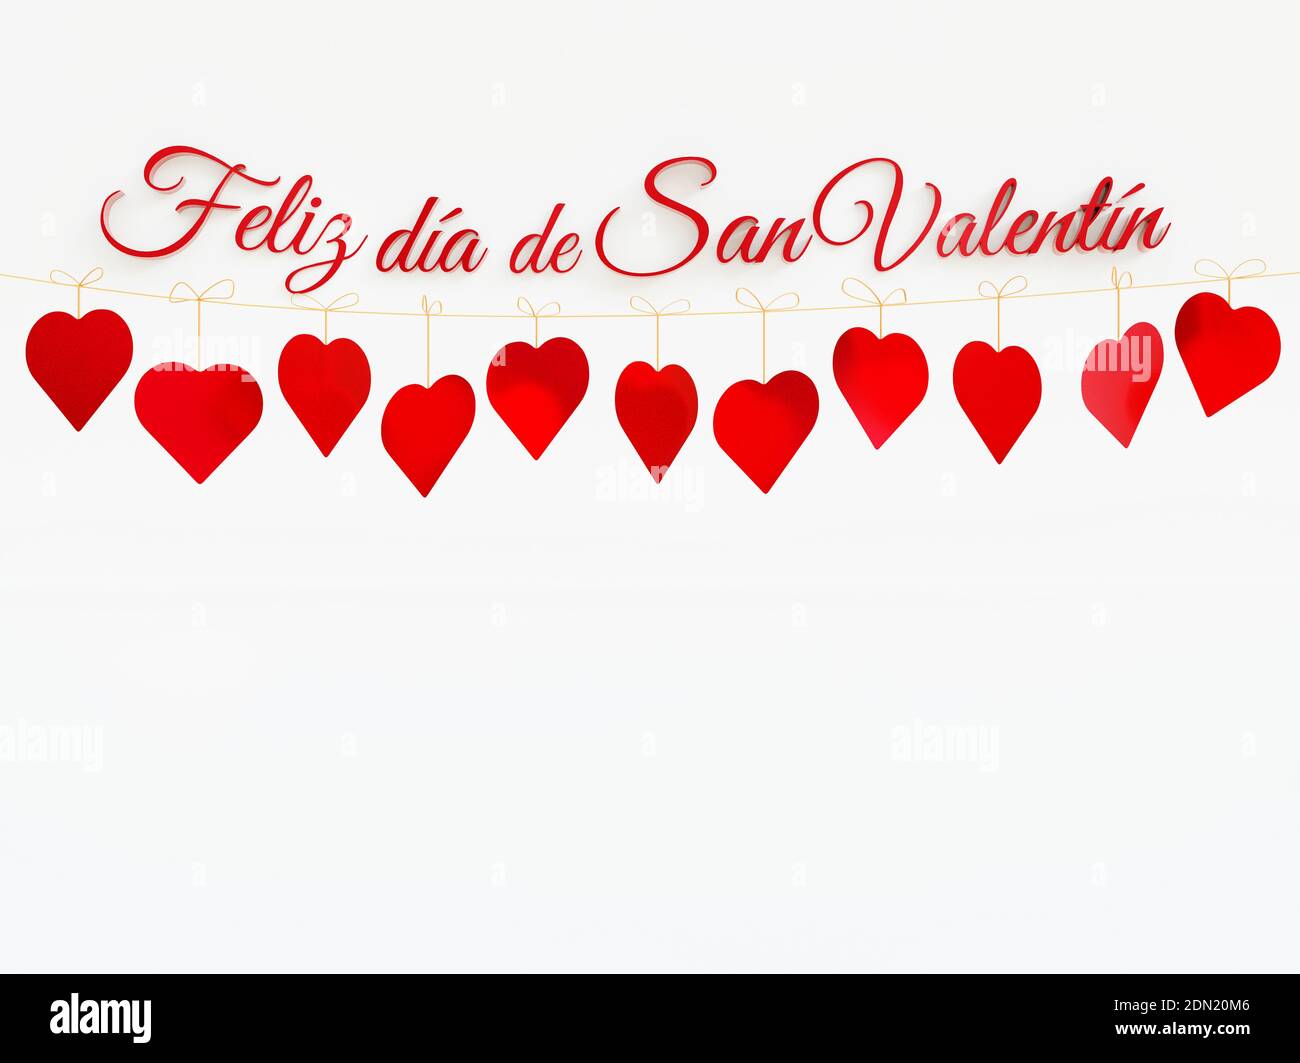 Feliz dia de San Valentin letrero - Happy Valentines day spanish text fit  for a banner -3d illustration concept Stock Photo - Alamy